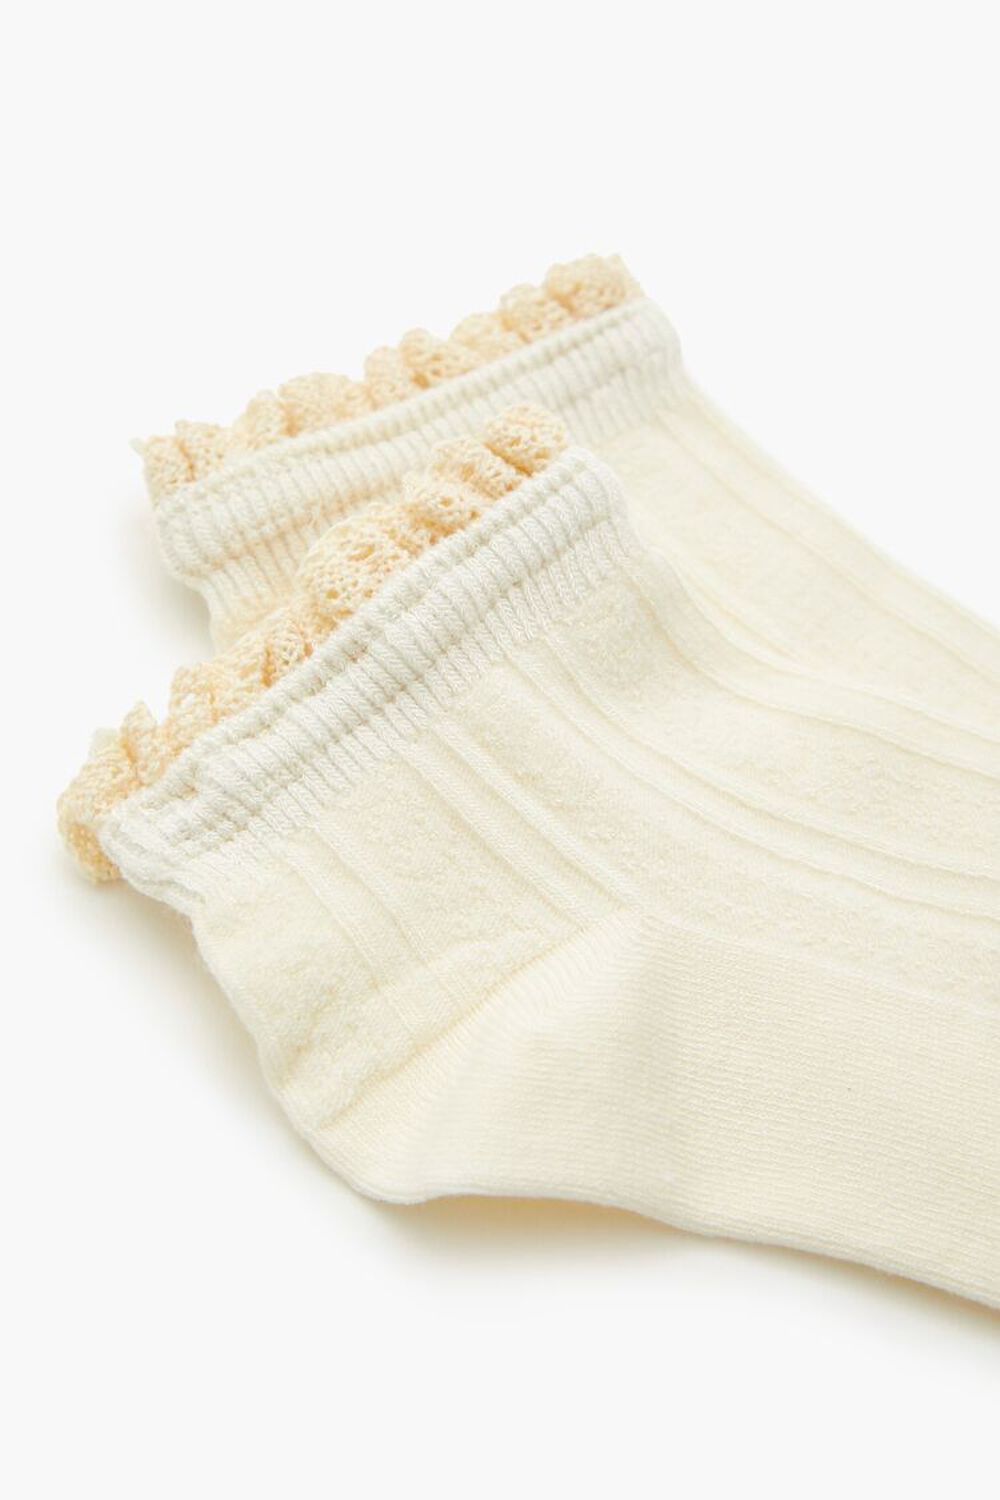 CREAM Ruffle-Trim Pointelle Ankle Socks, image 3